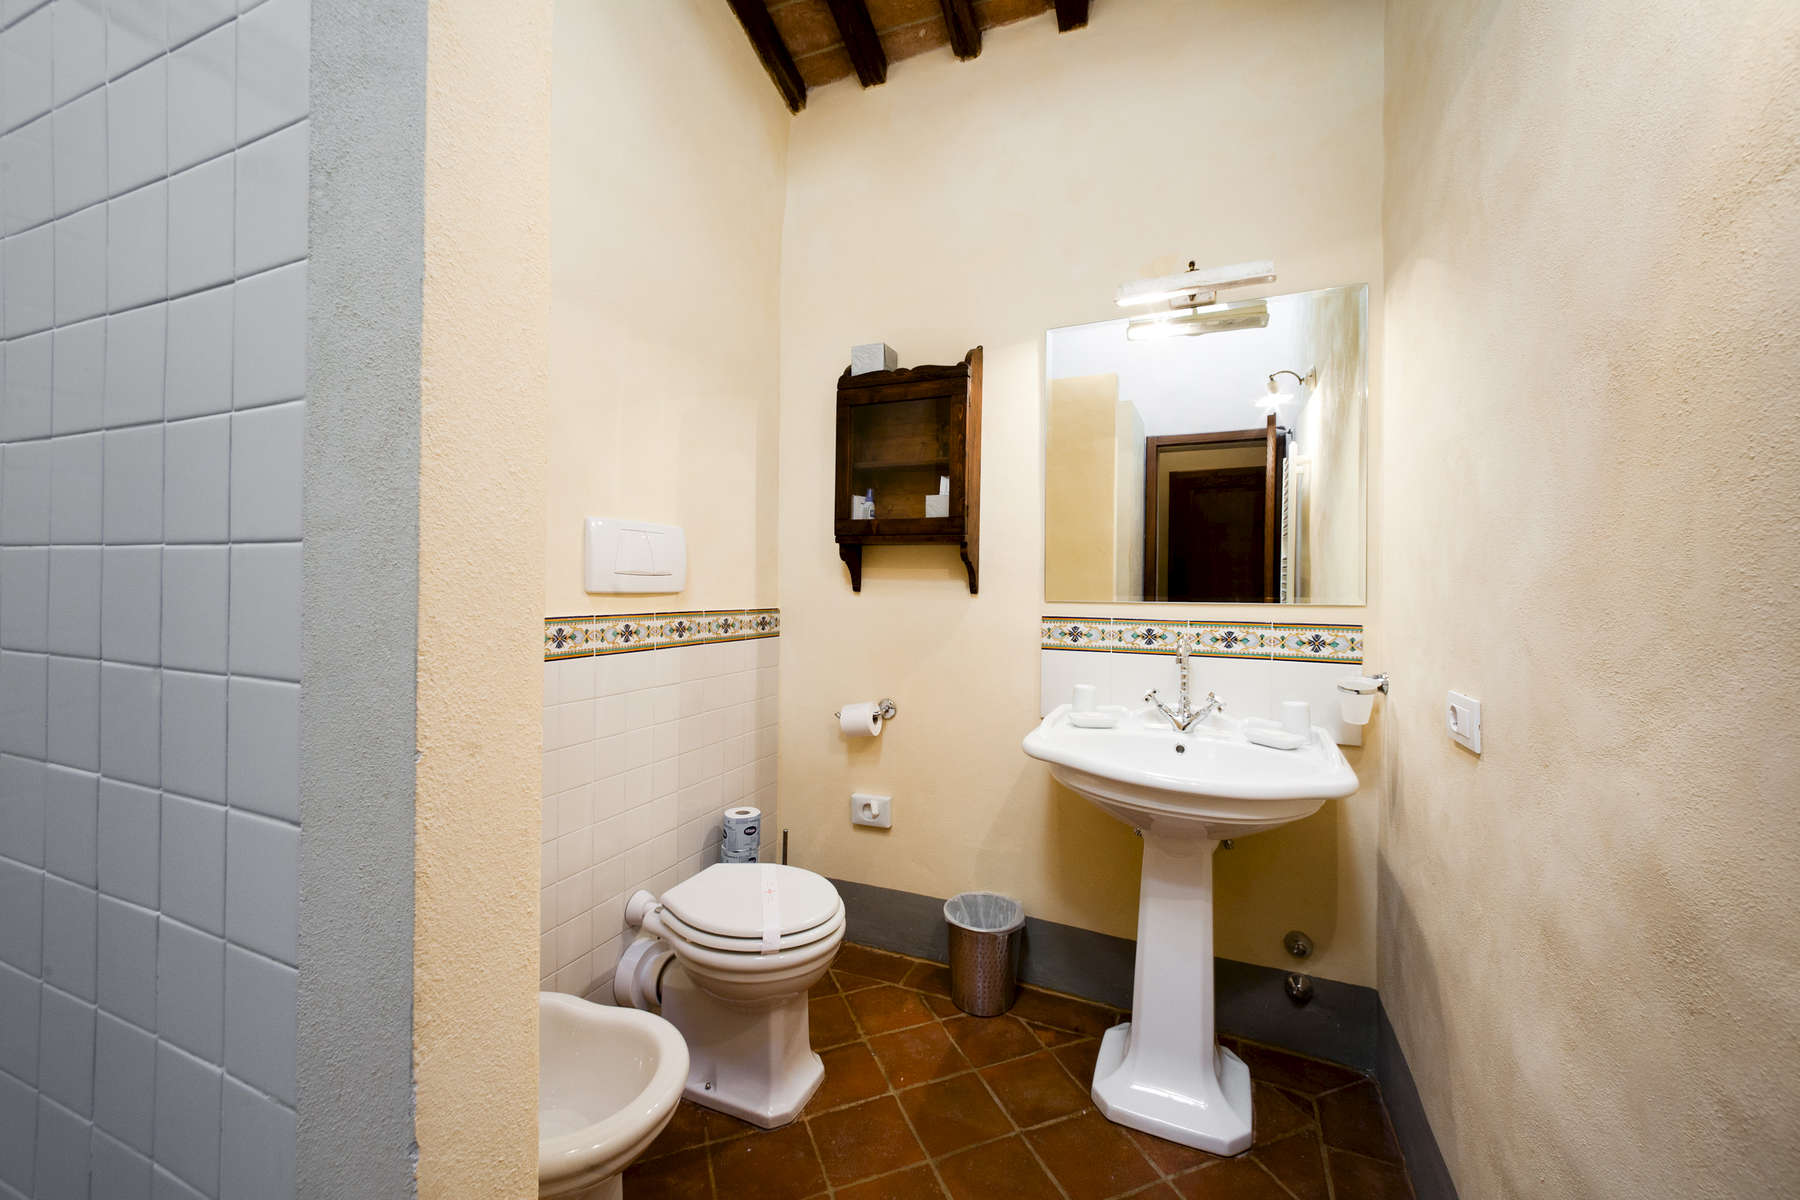 Signorelli Bathroom